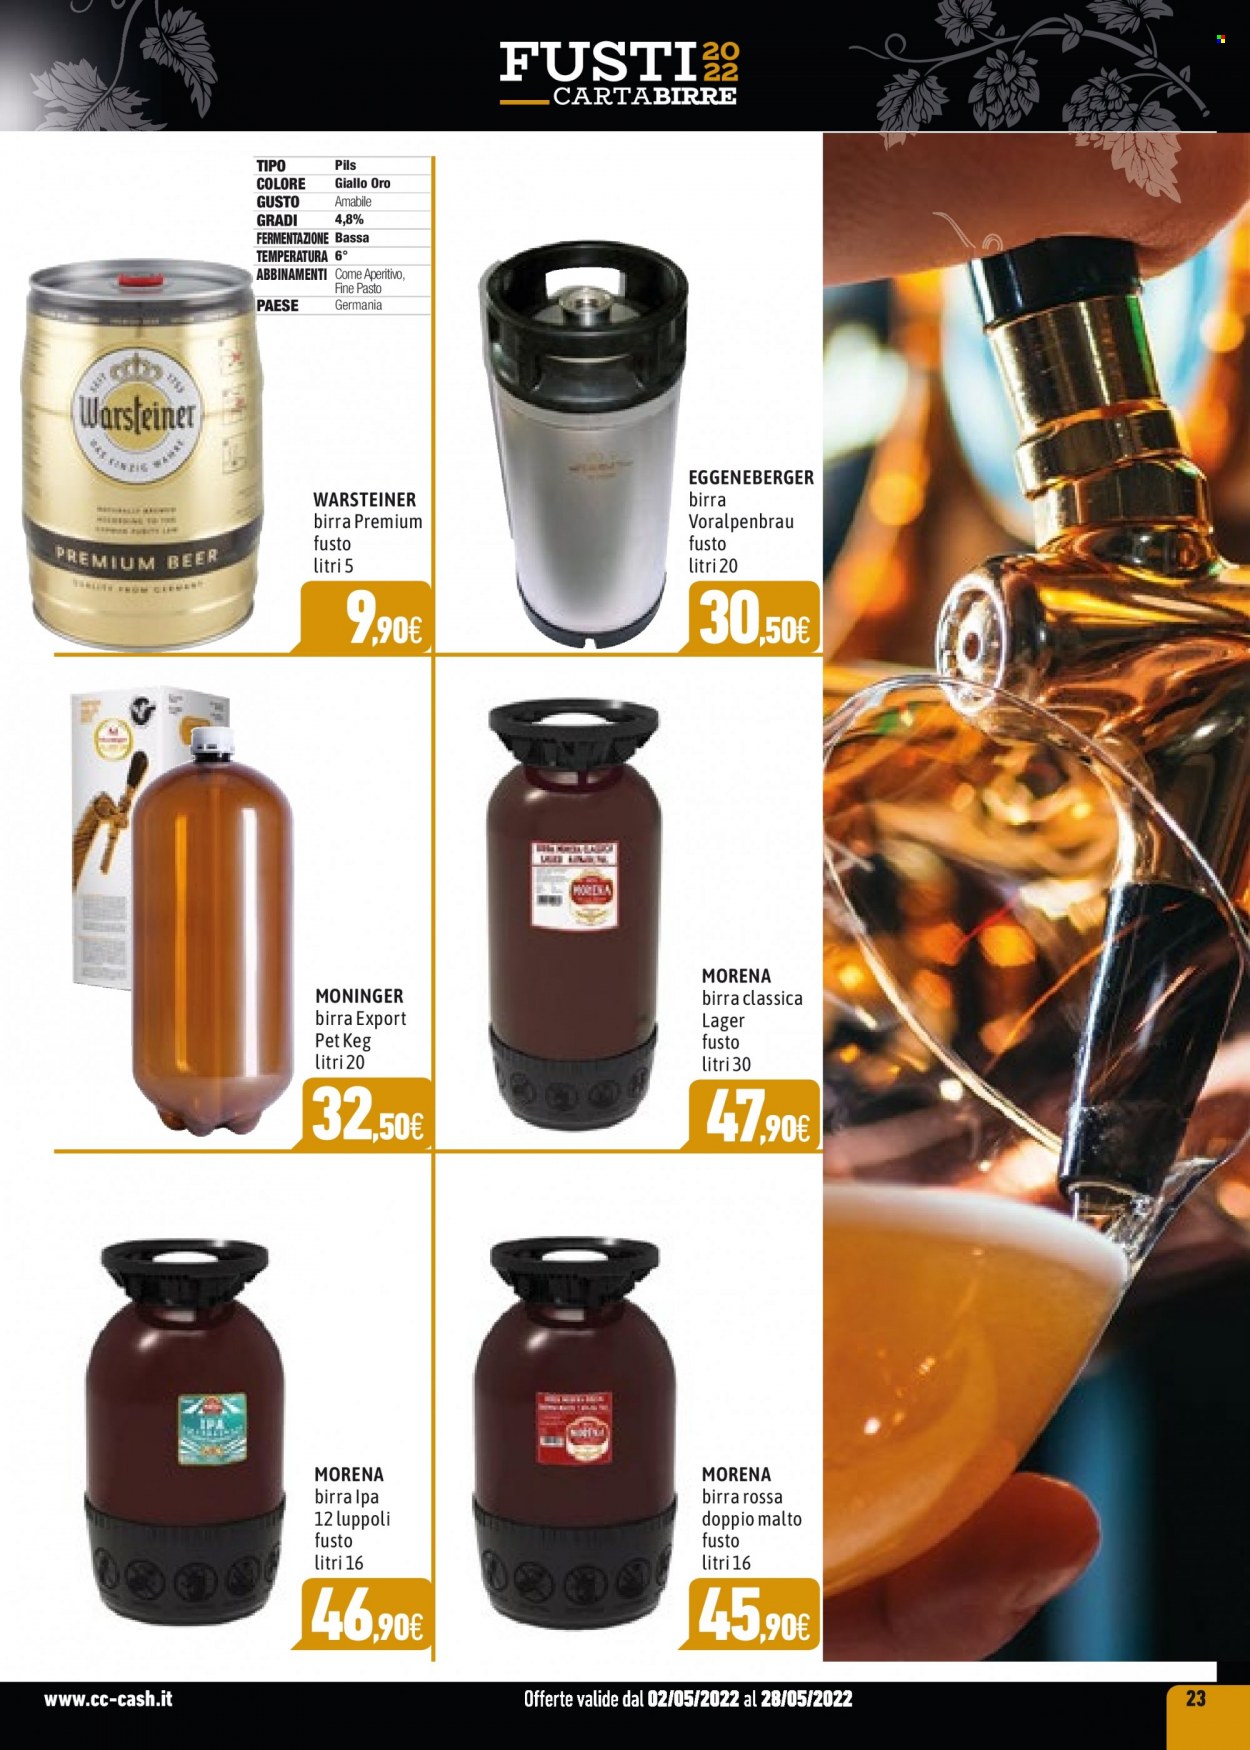 thumbnail - Volantino C+C Cash & Carry - 2/5/2022 - 28/5/2022 - Prodotti in offerta - birra, birra tipo IPA, birra tipo lager, Warsteiner, birra tipo pilsner. Pagina 23.